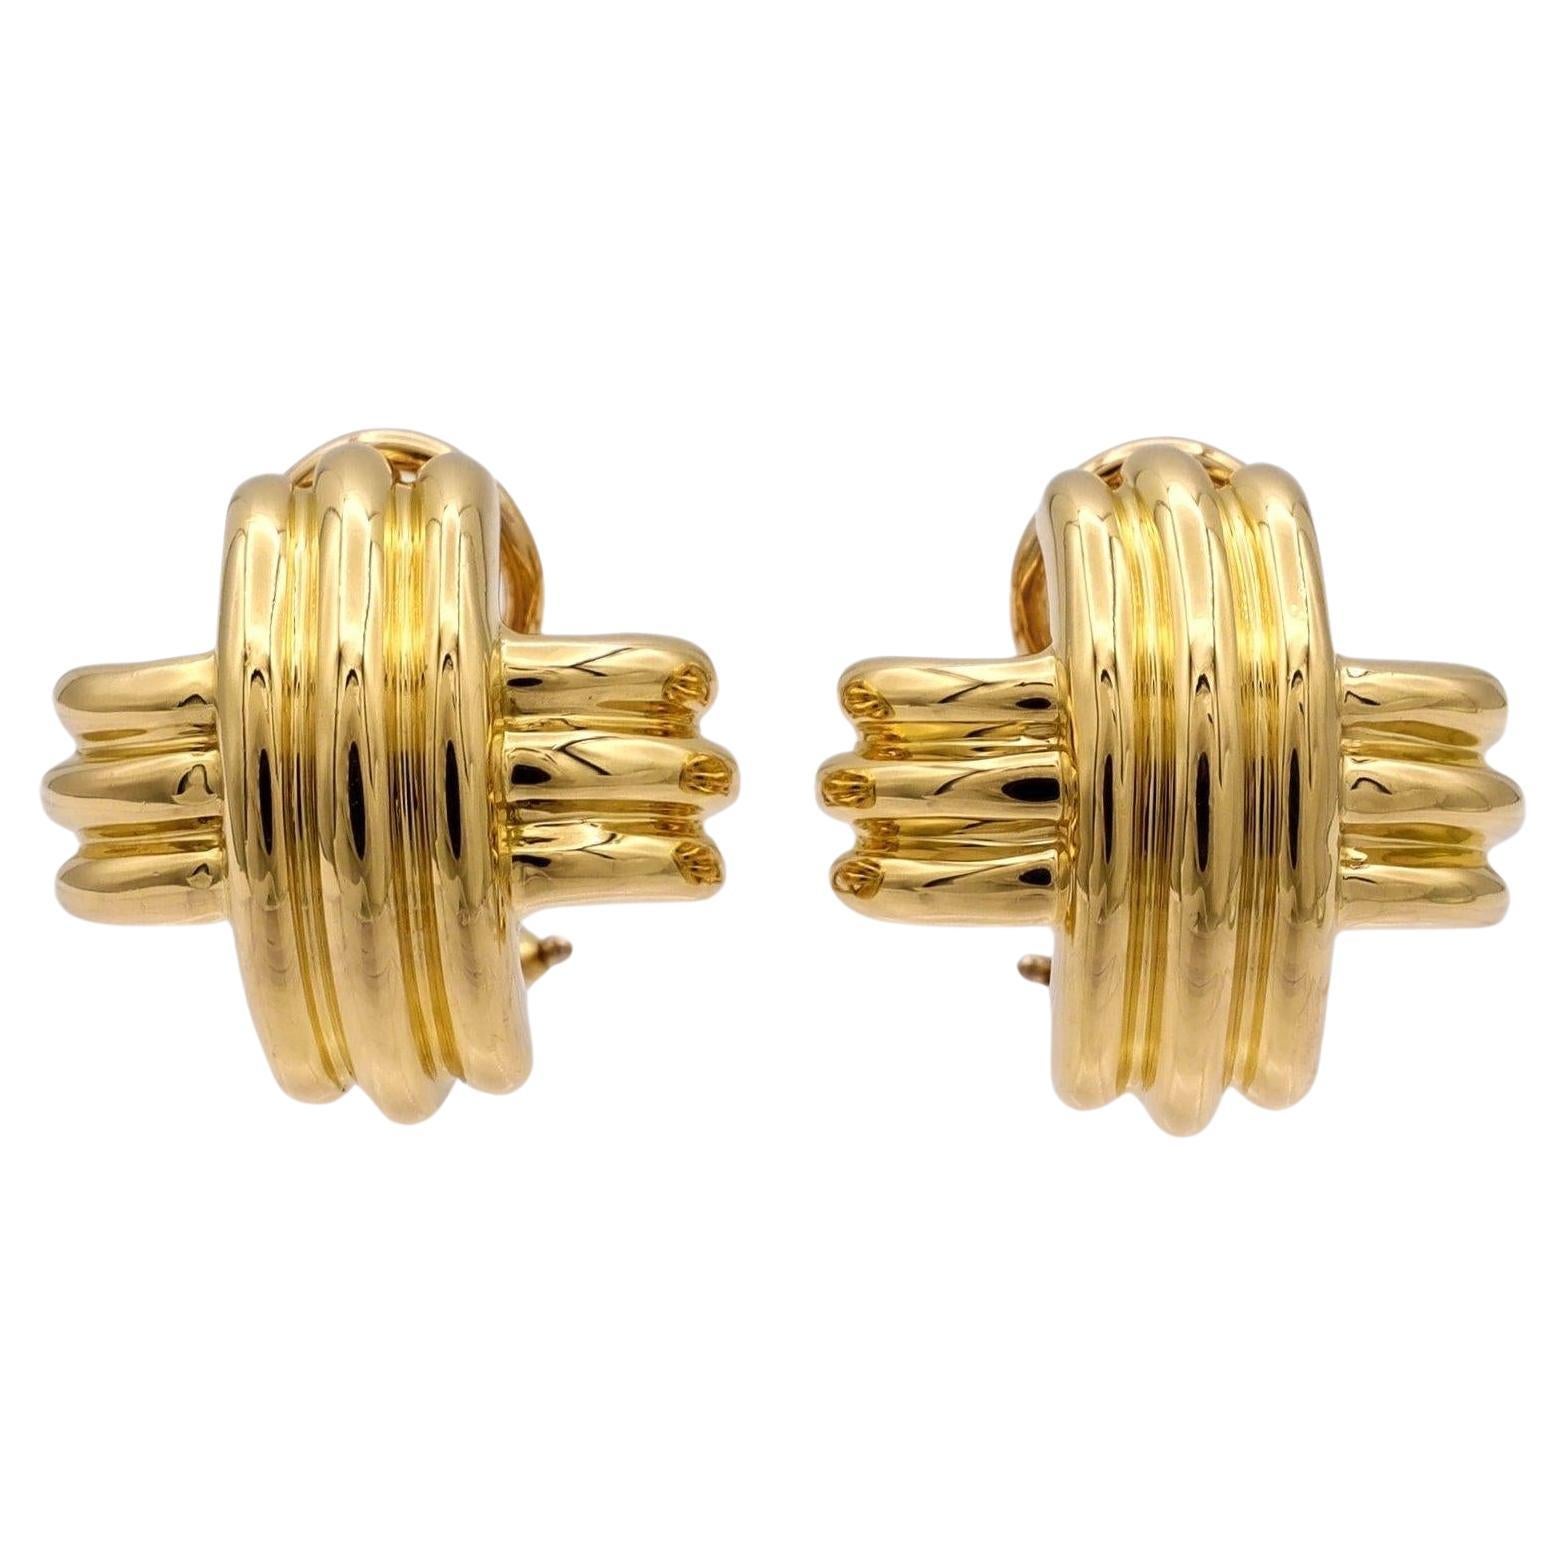 Tiffany & Co Signature X Clip Earrings 18K Yellow Gold 19mm Medium Size